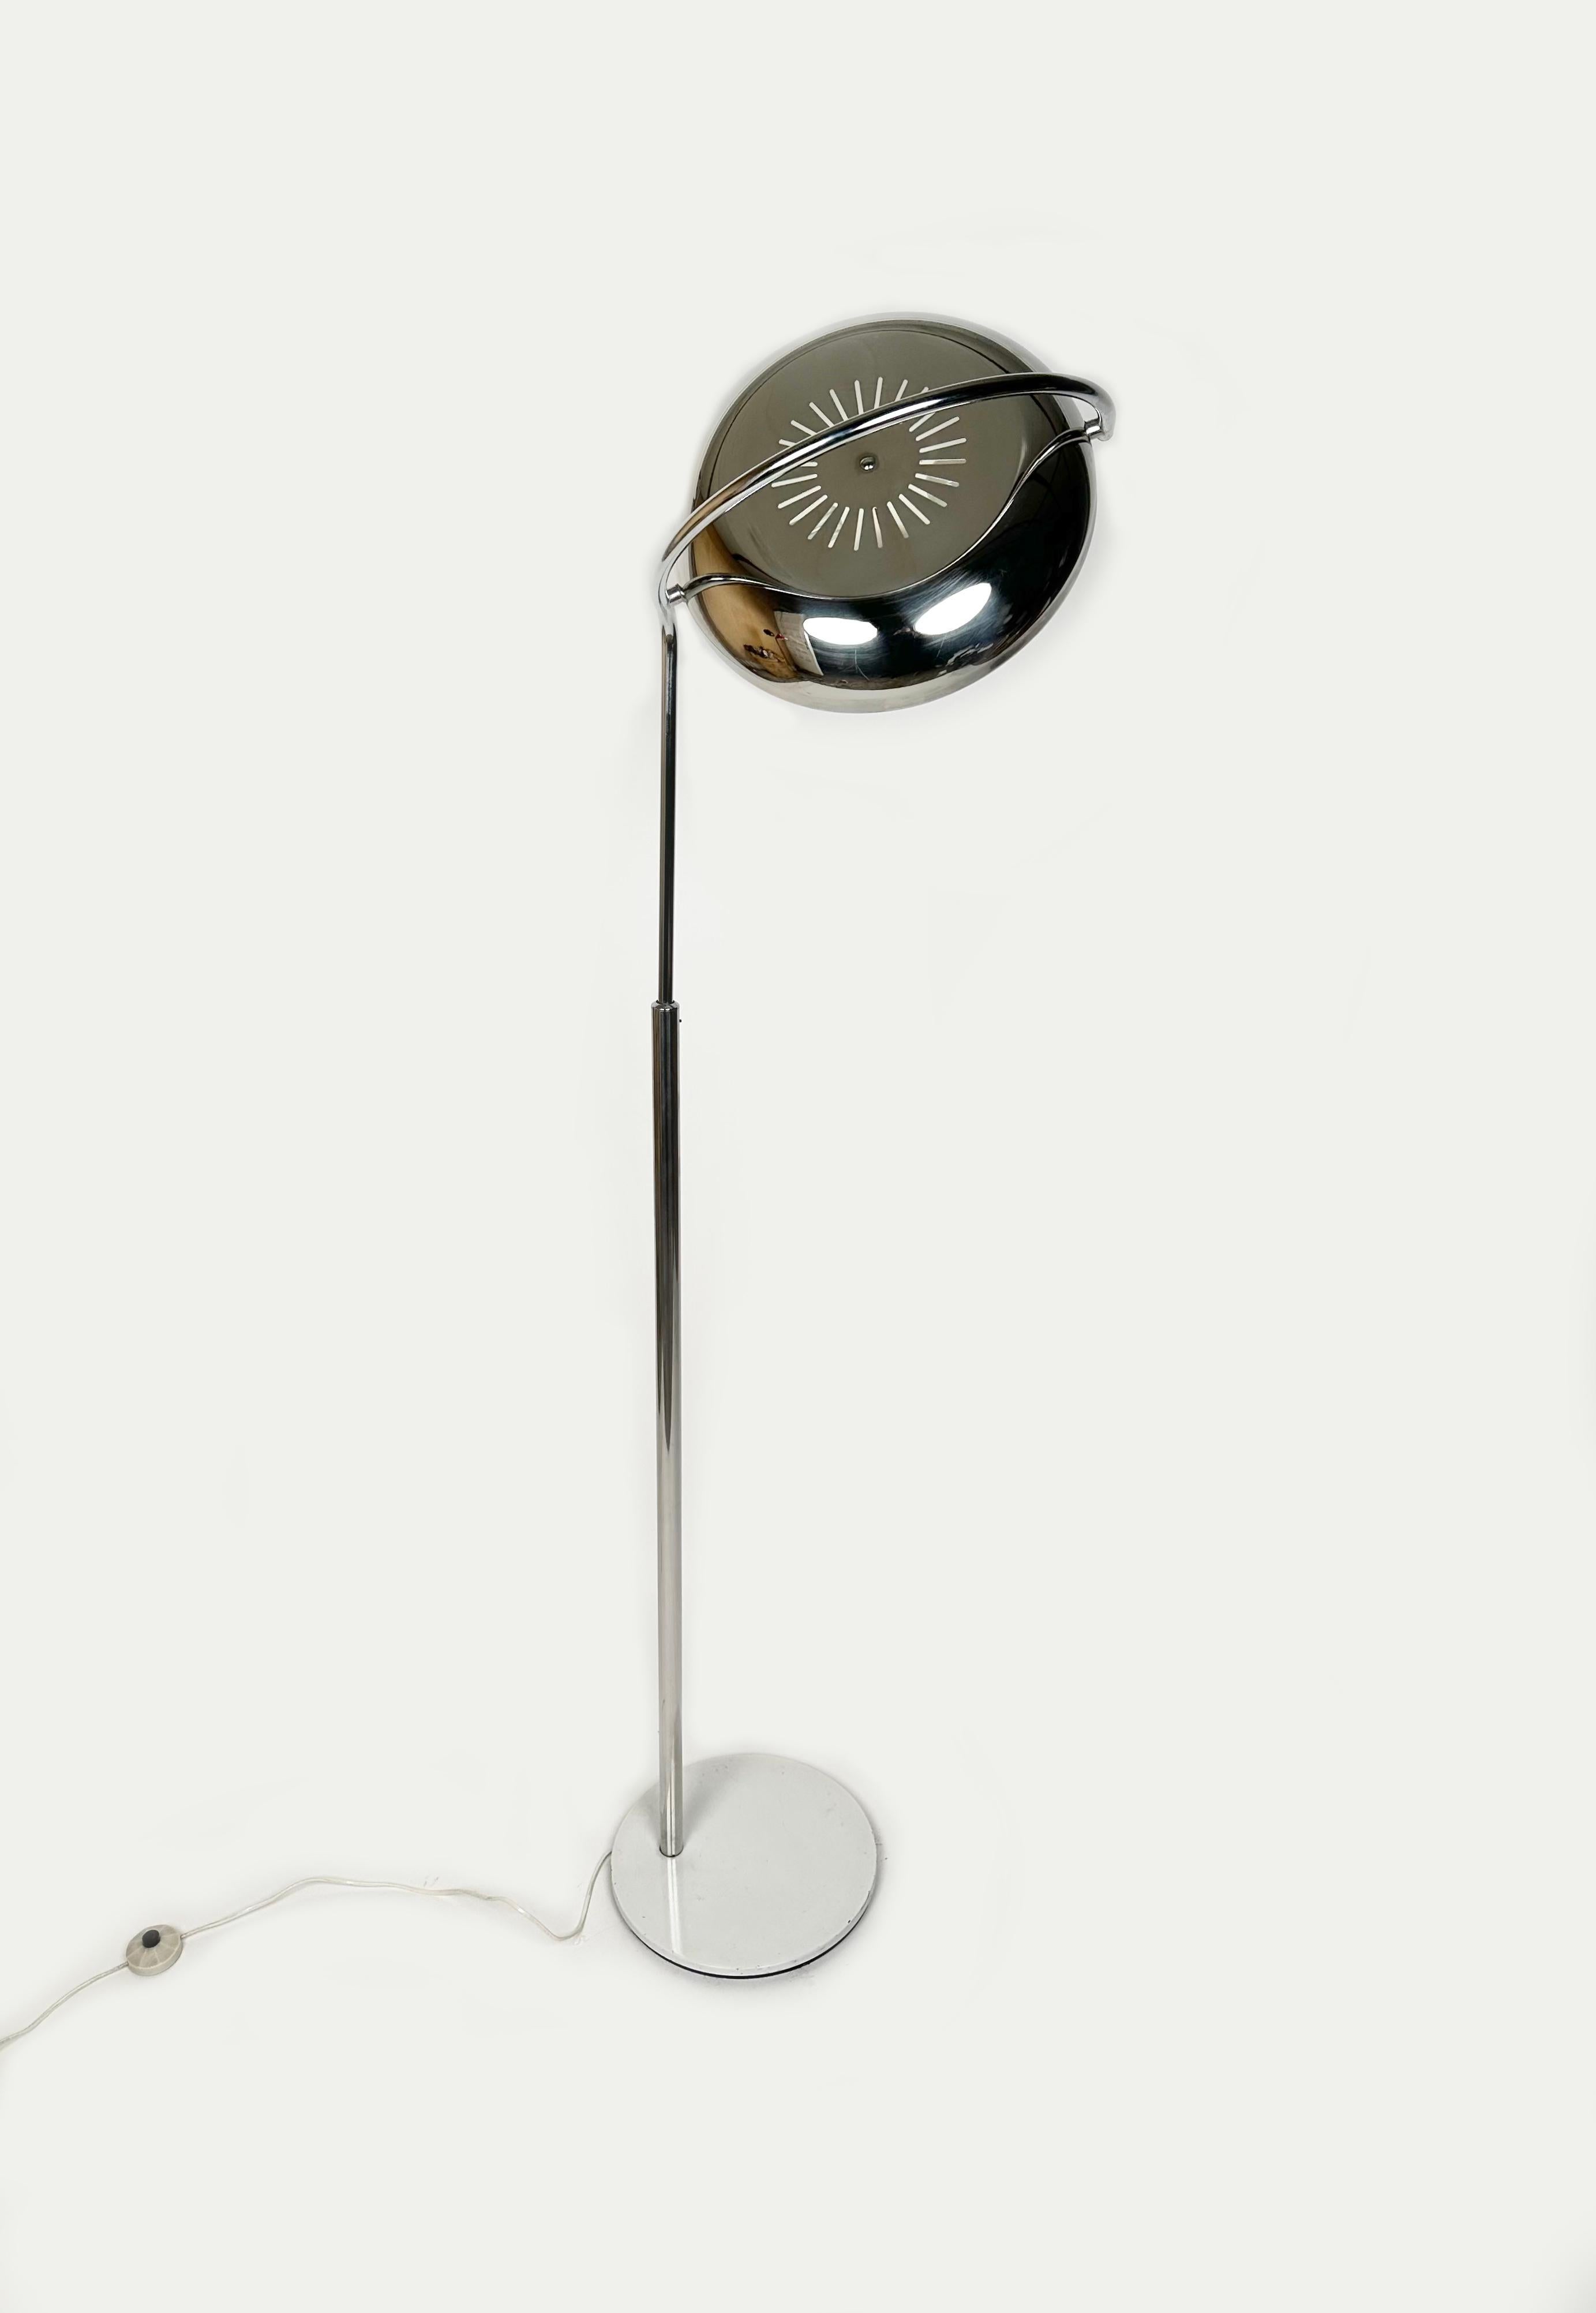 Midcentury Adjustable Floor Lamp in Chrome & Plexiglass by Reggiani, Italy 1970s For Sale 1